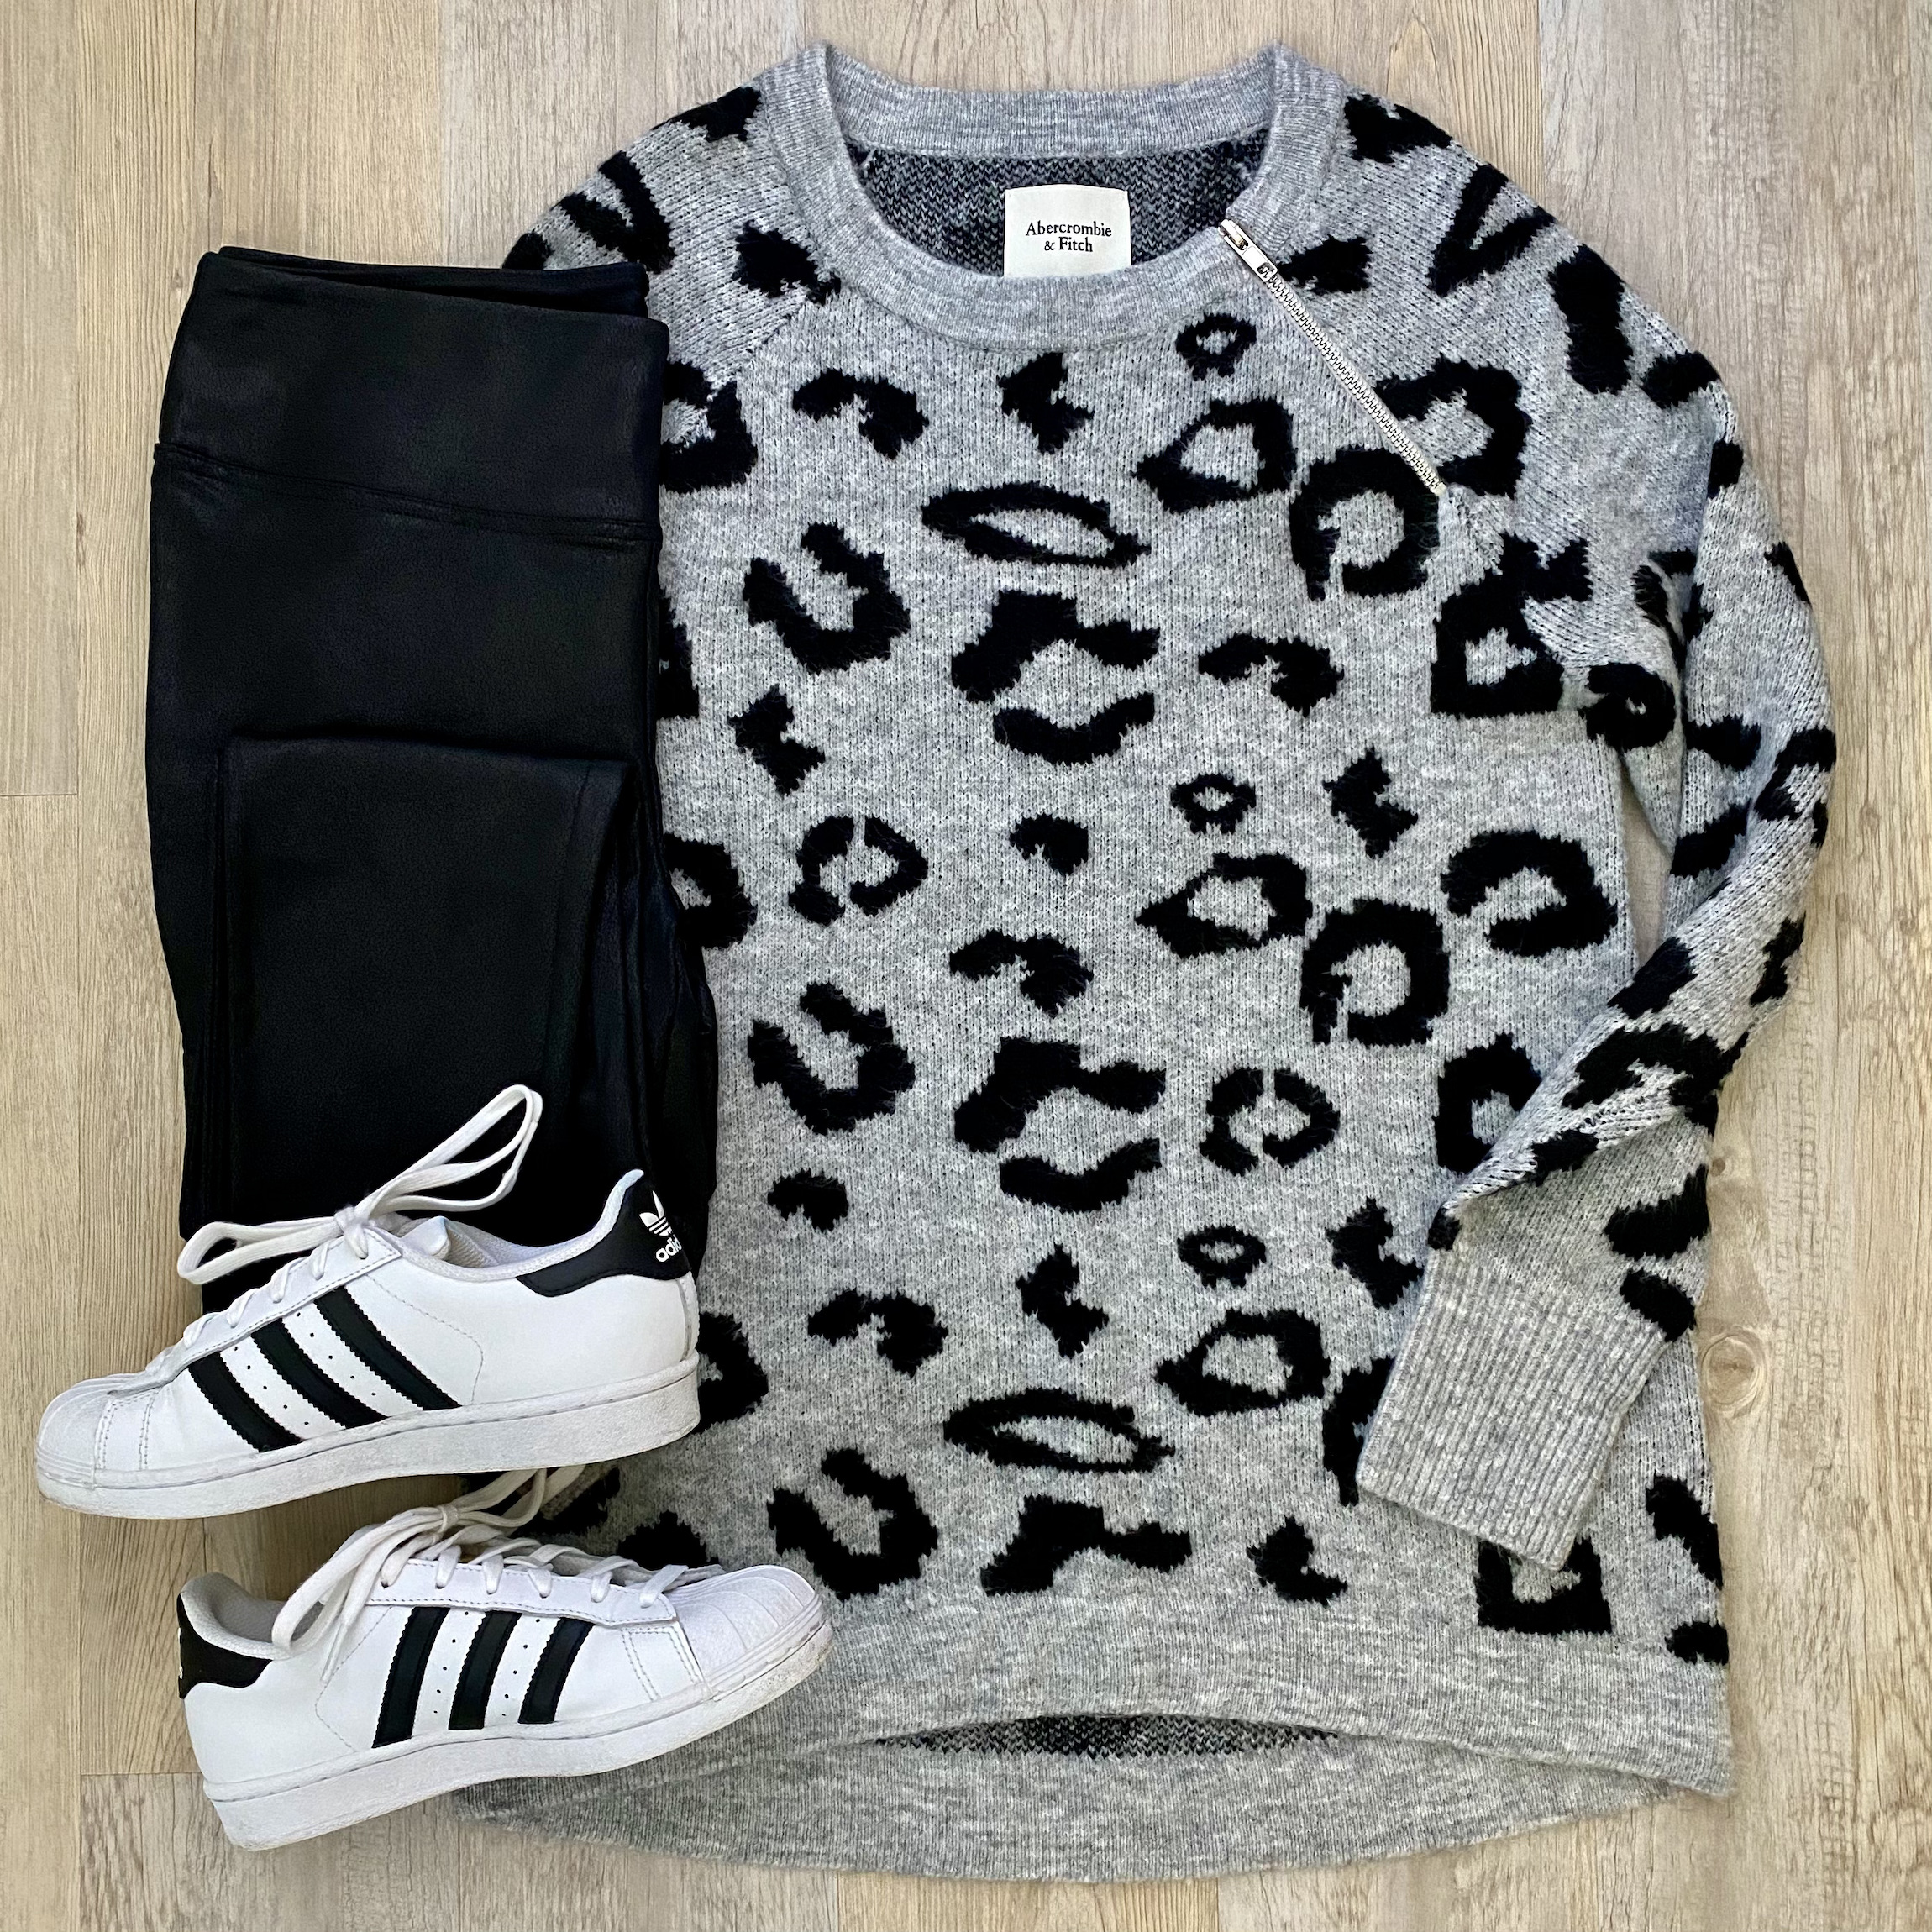 Abercrombie leopard zip sweater